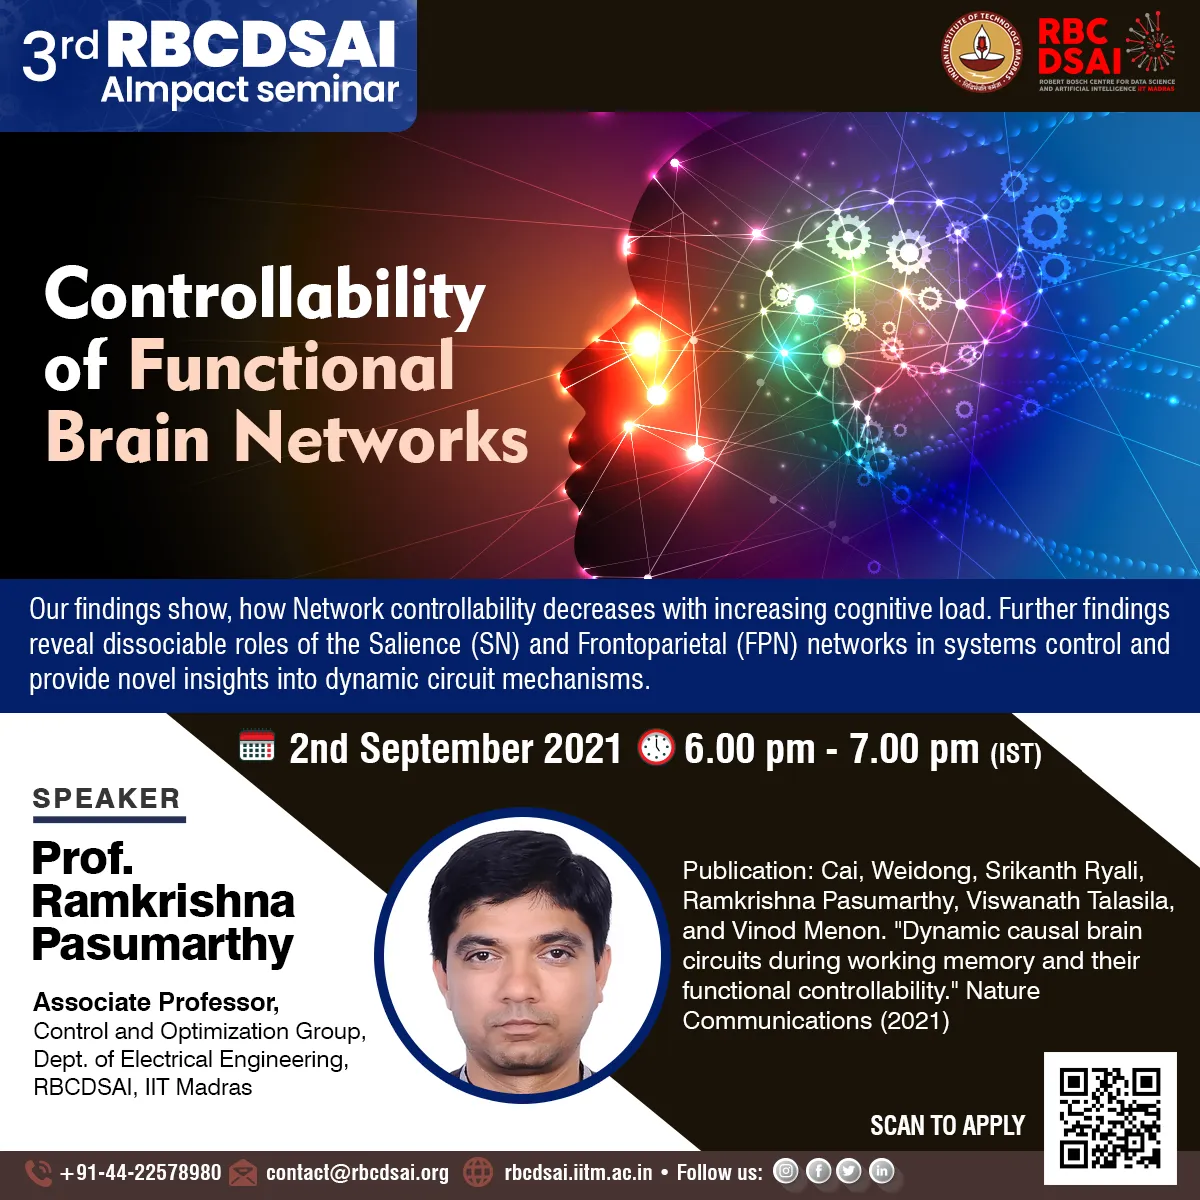 Third RBCDSAI AImpact Seminar by Prof. Ramkrishna Pasumarthy